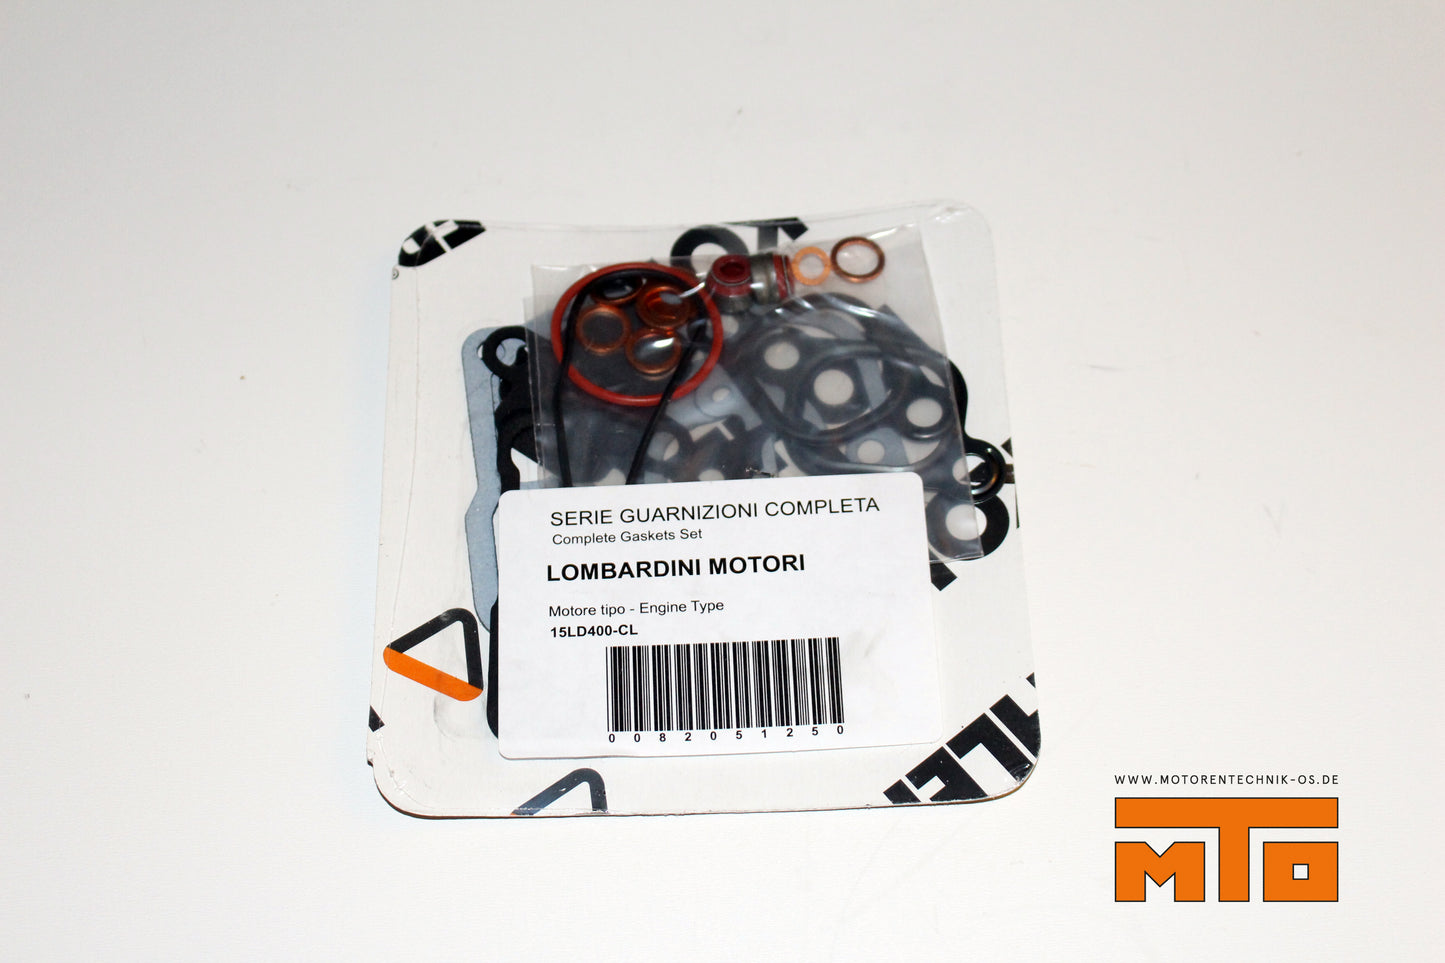 Lombardini Motordichtsatz für 15LD400 und 15LD440 Motor